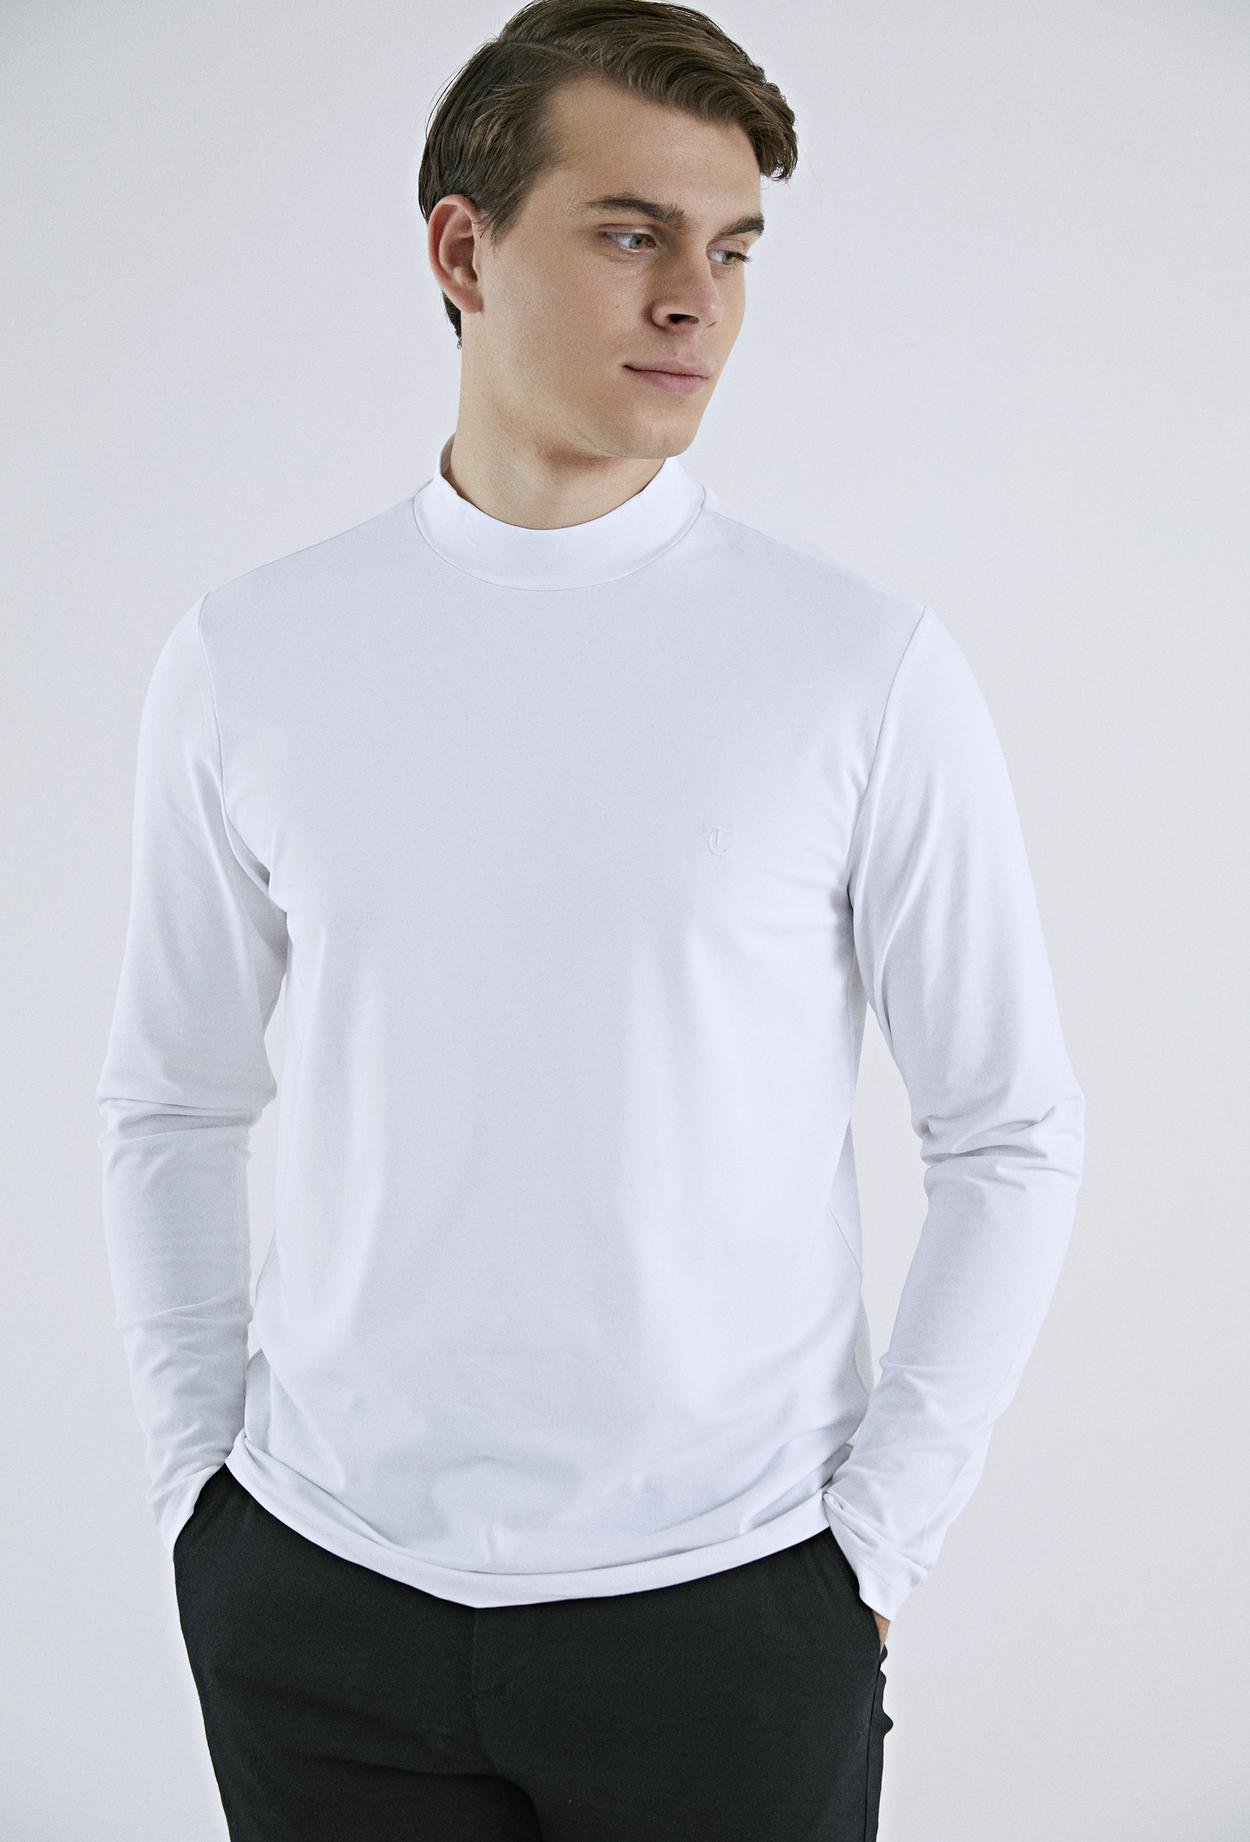 Twn Slim Fit Beyaz T-shirt